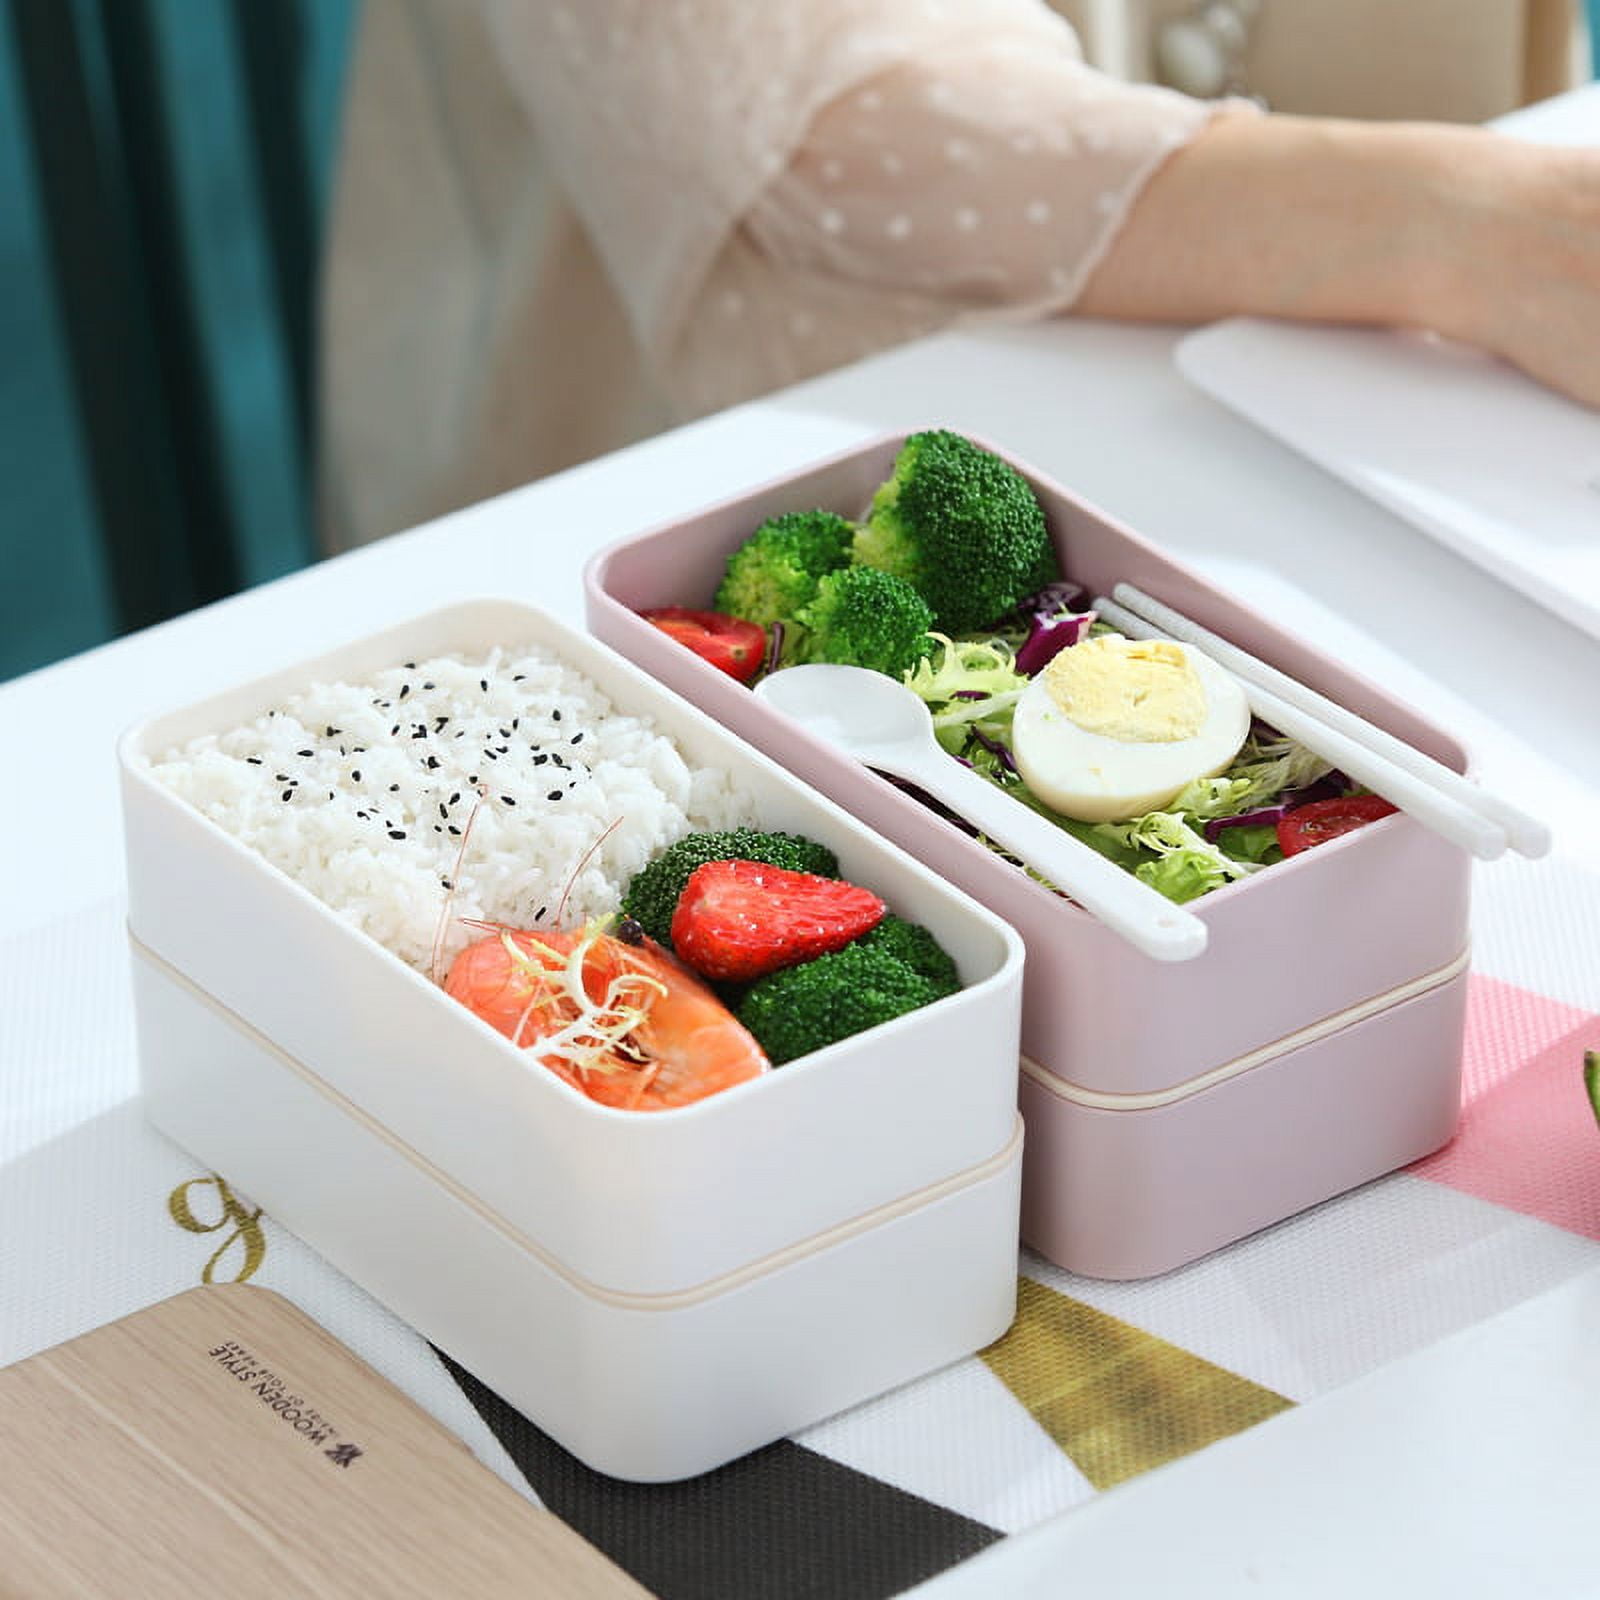 Premium Bento Lunch Box in 8 Modern Colors - 2 Compartments, Leak